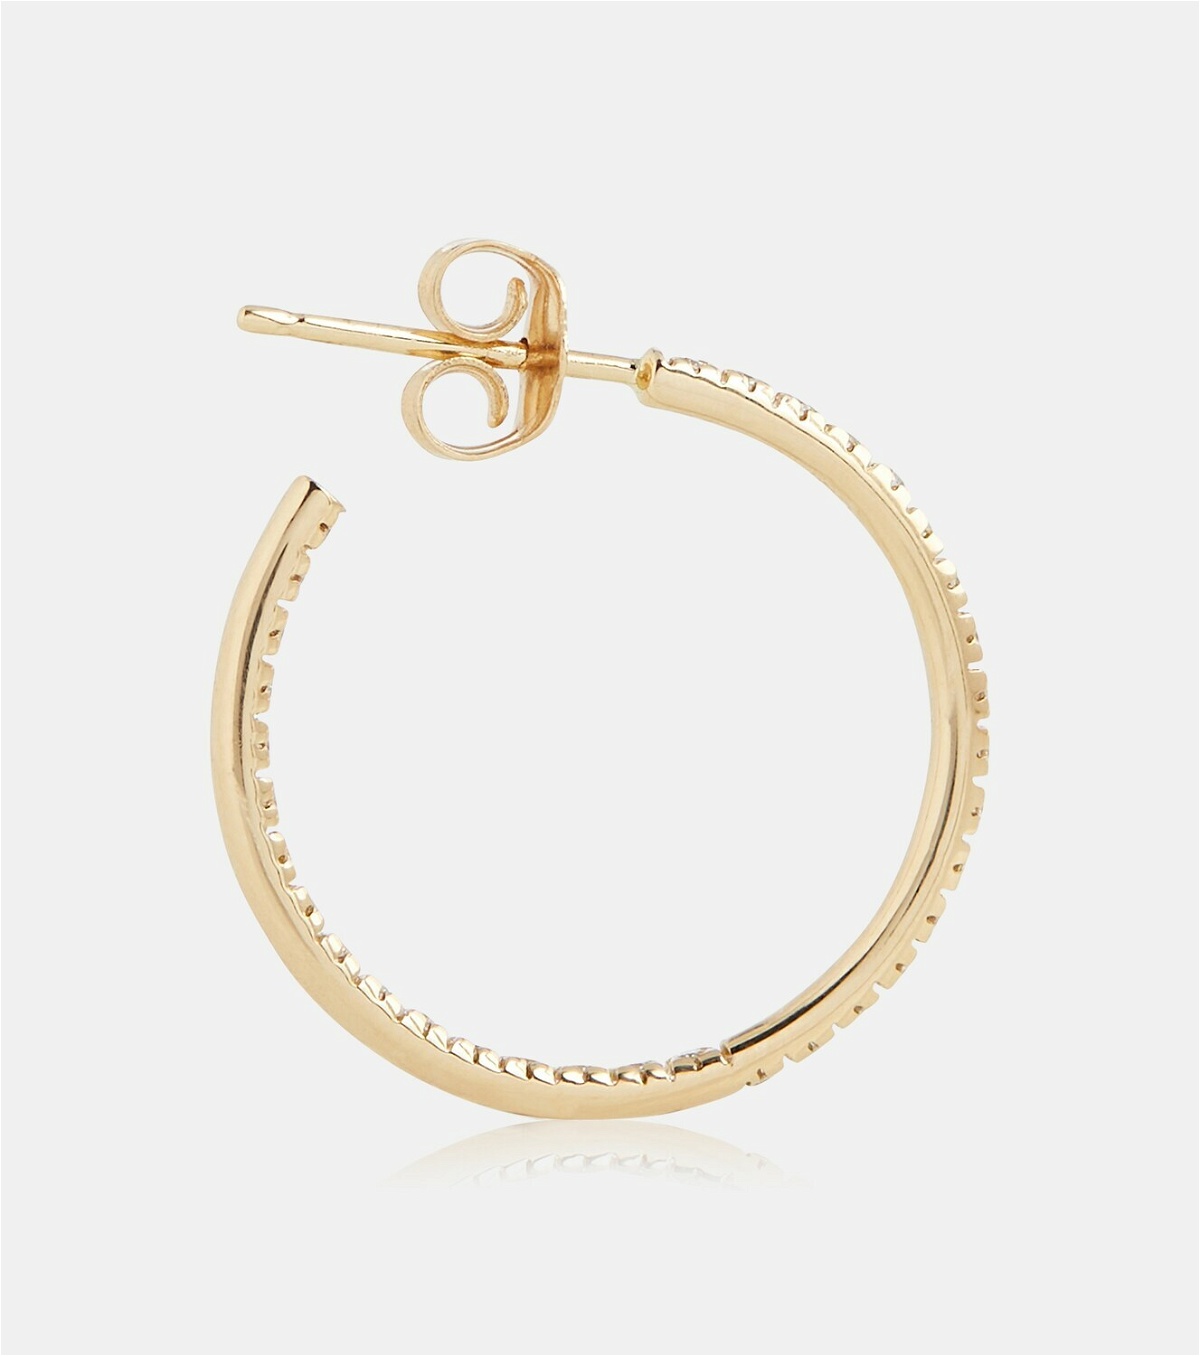 Sydney Evan 14kt gold hoop earrings with diamonds